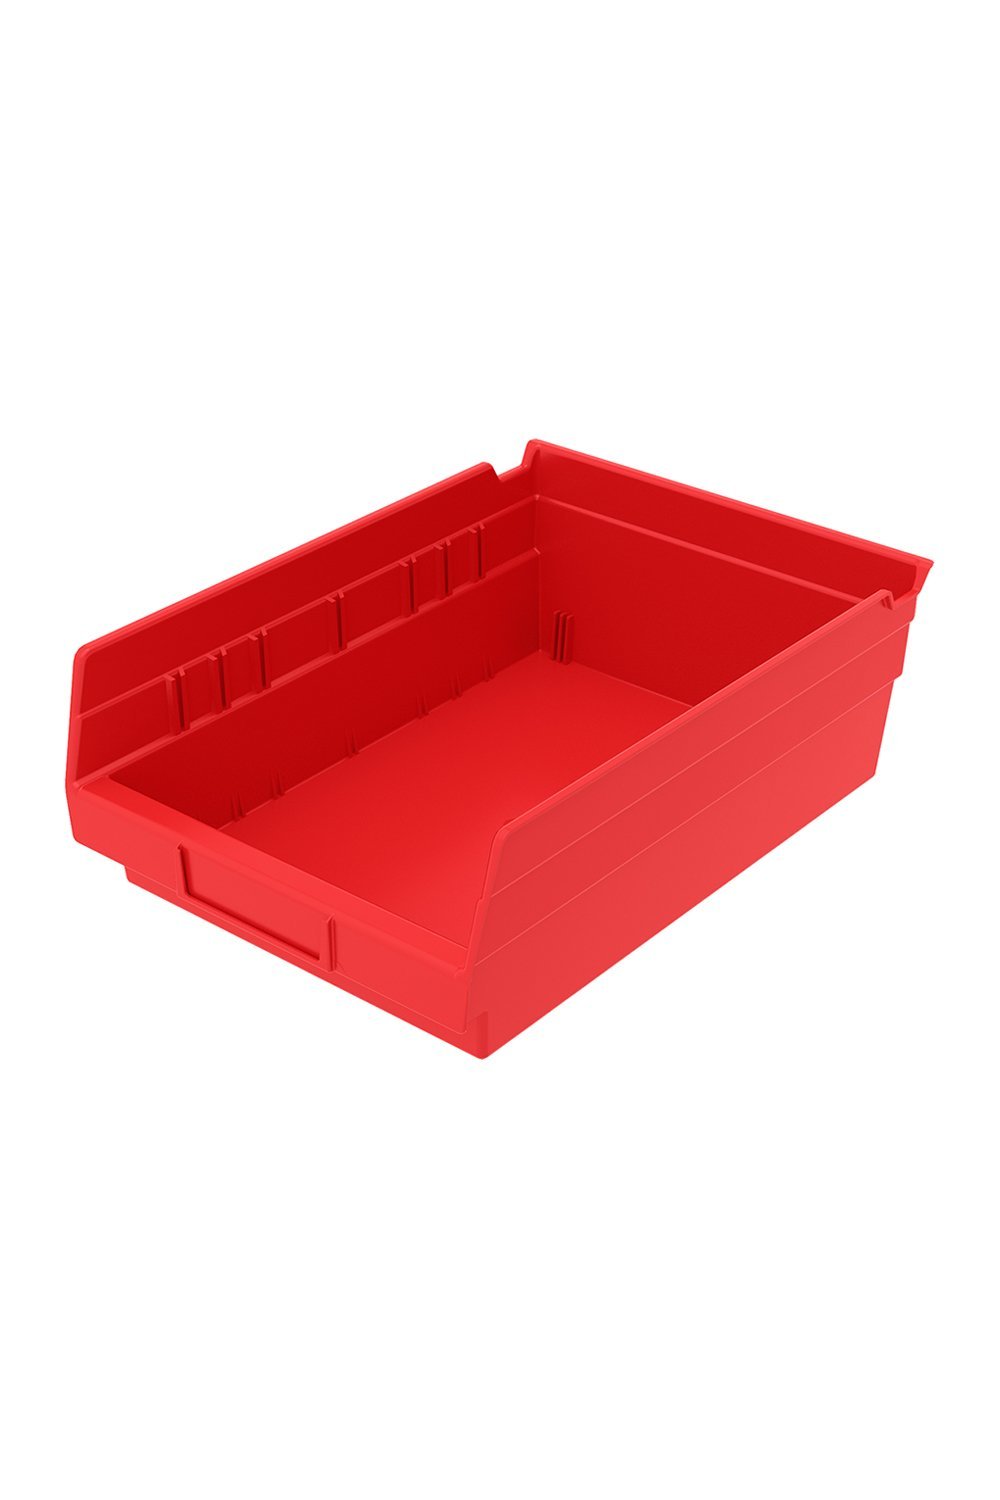 Shelf Bin for 12"D Shelves Bins & Containers Acart 11-5/8'' x 8-3/8'' x 4'' Red 